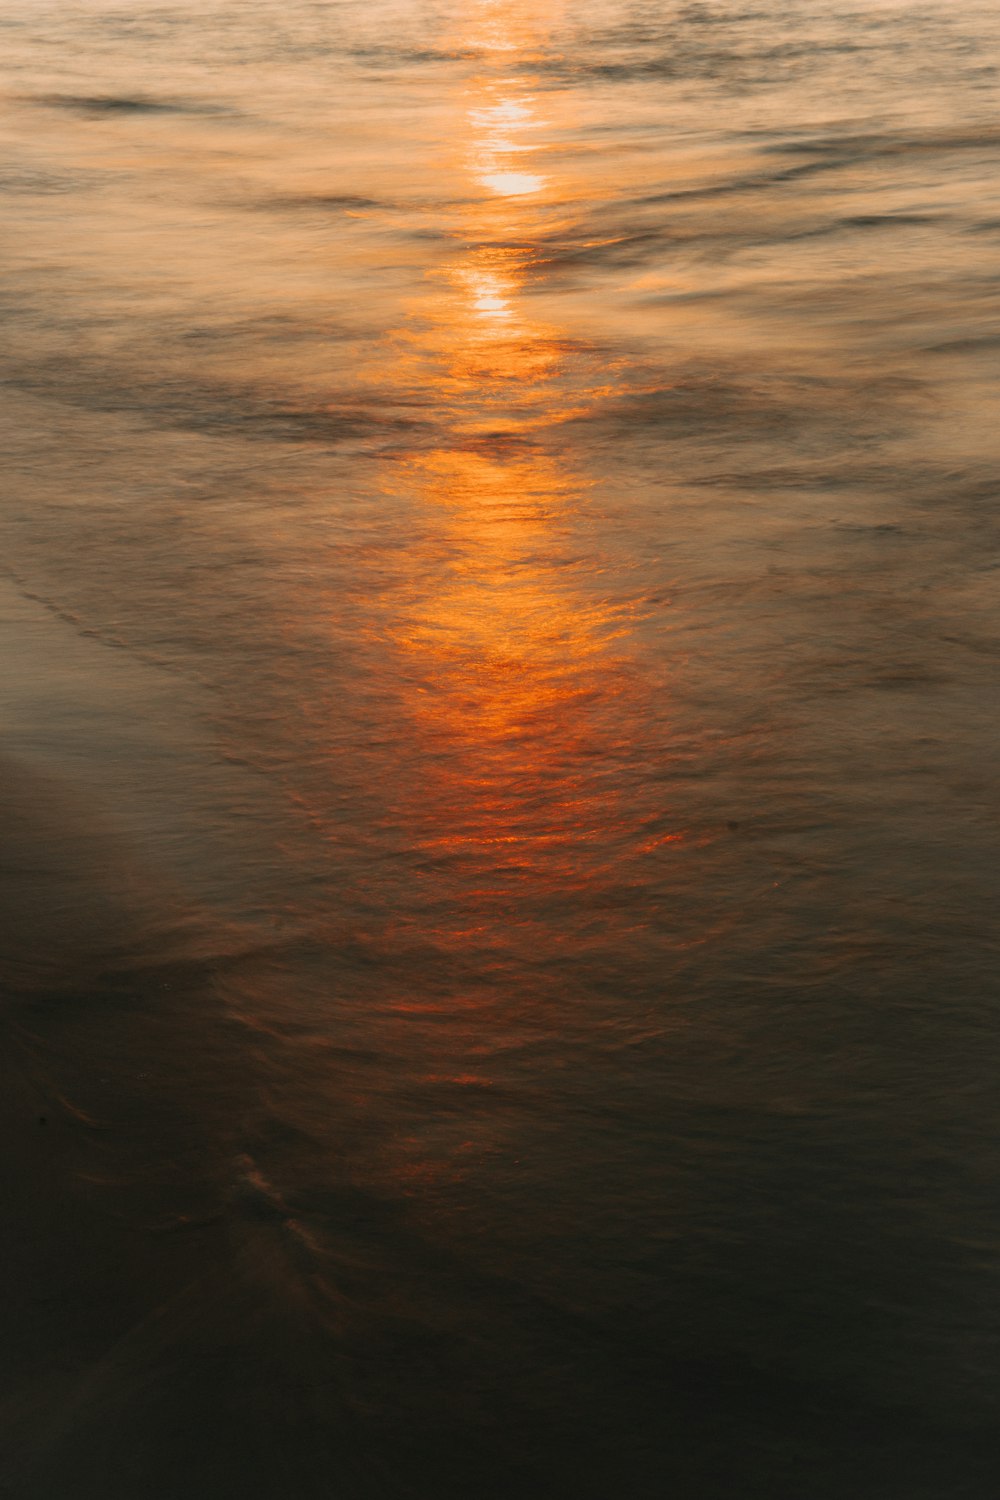 Gewässer bei Sonnenuntergang